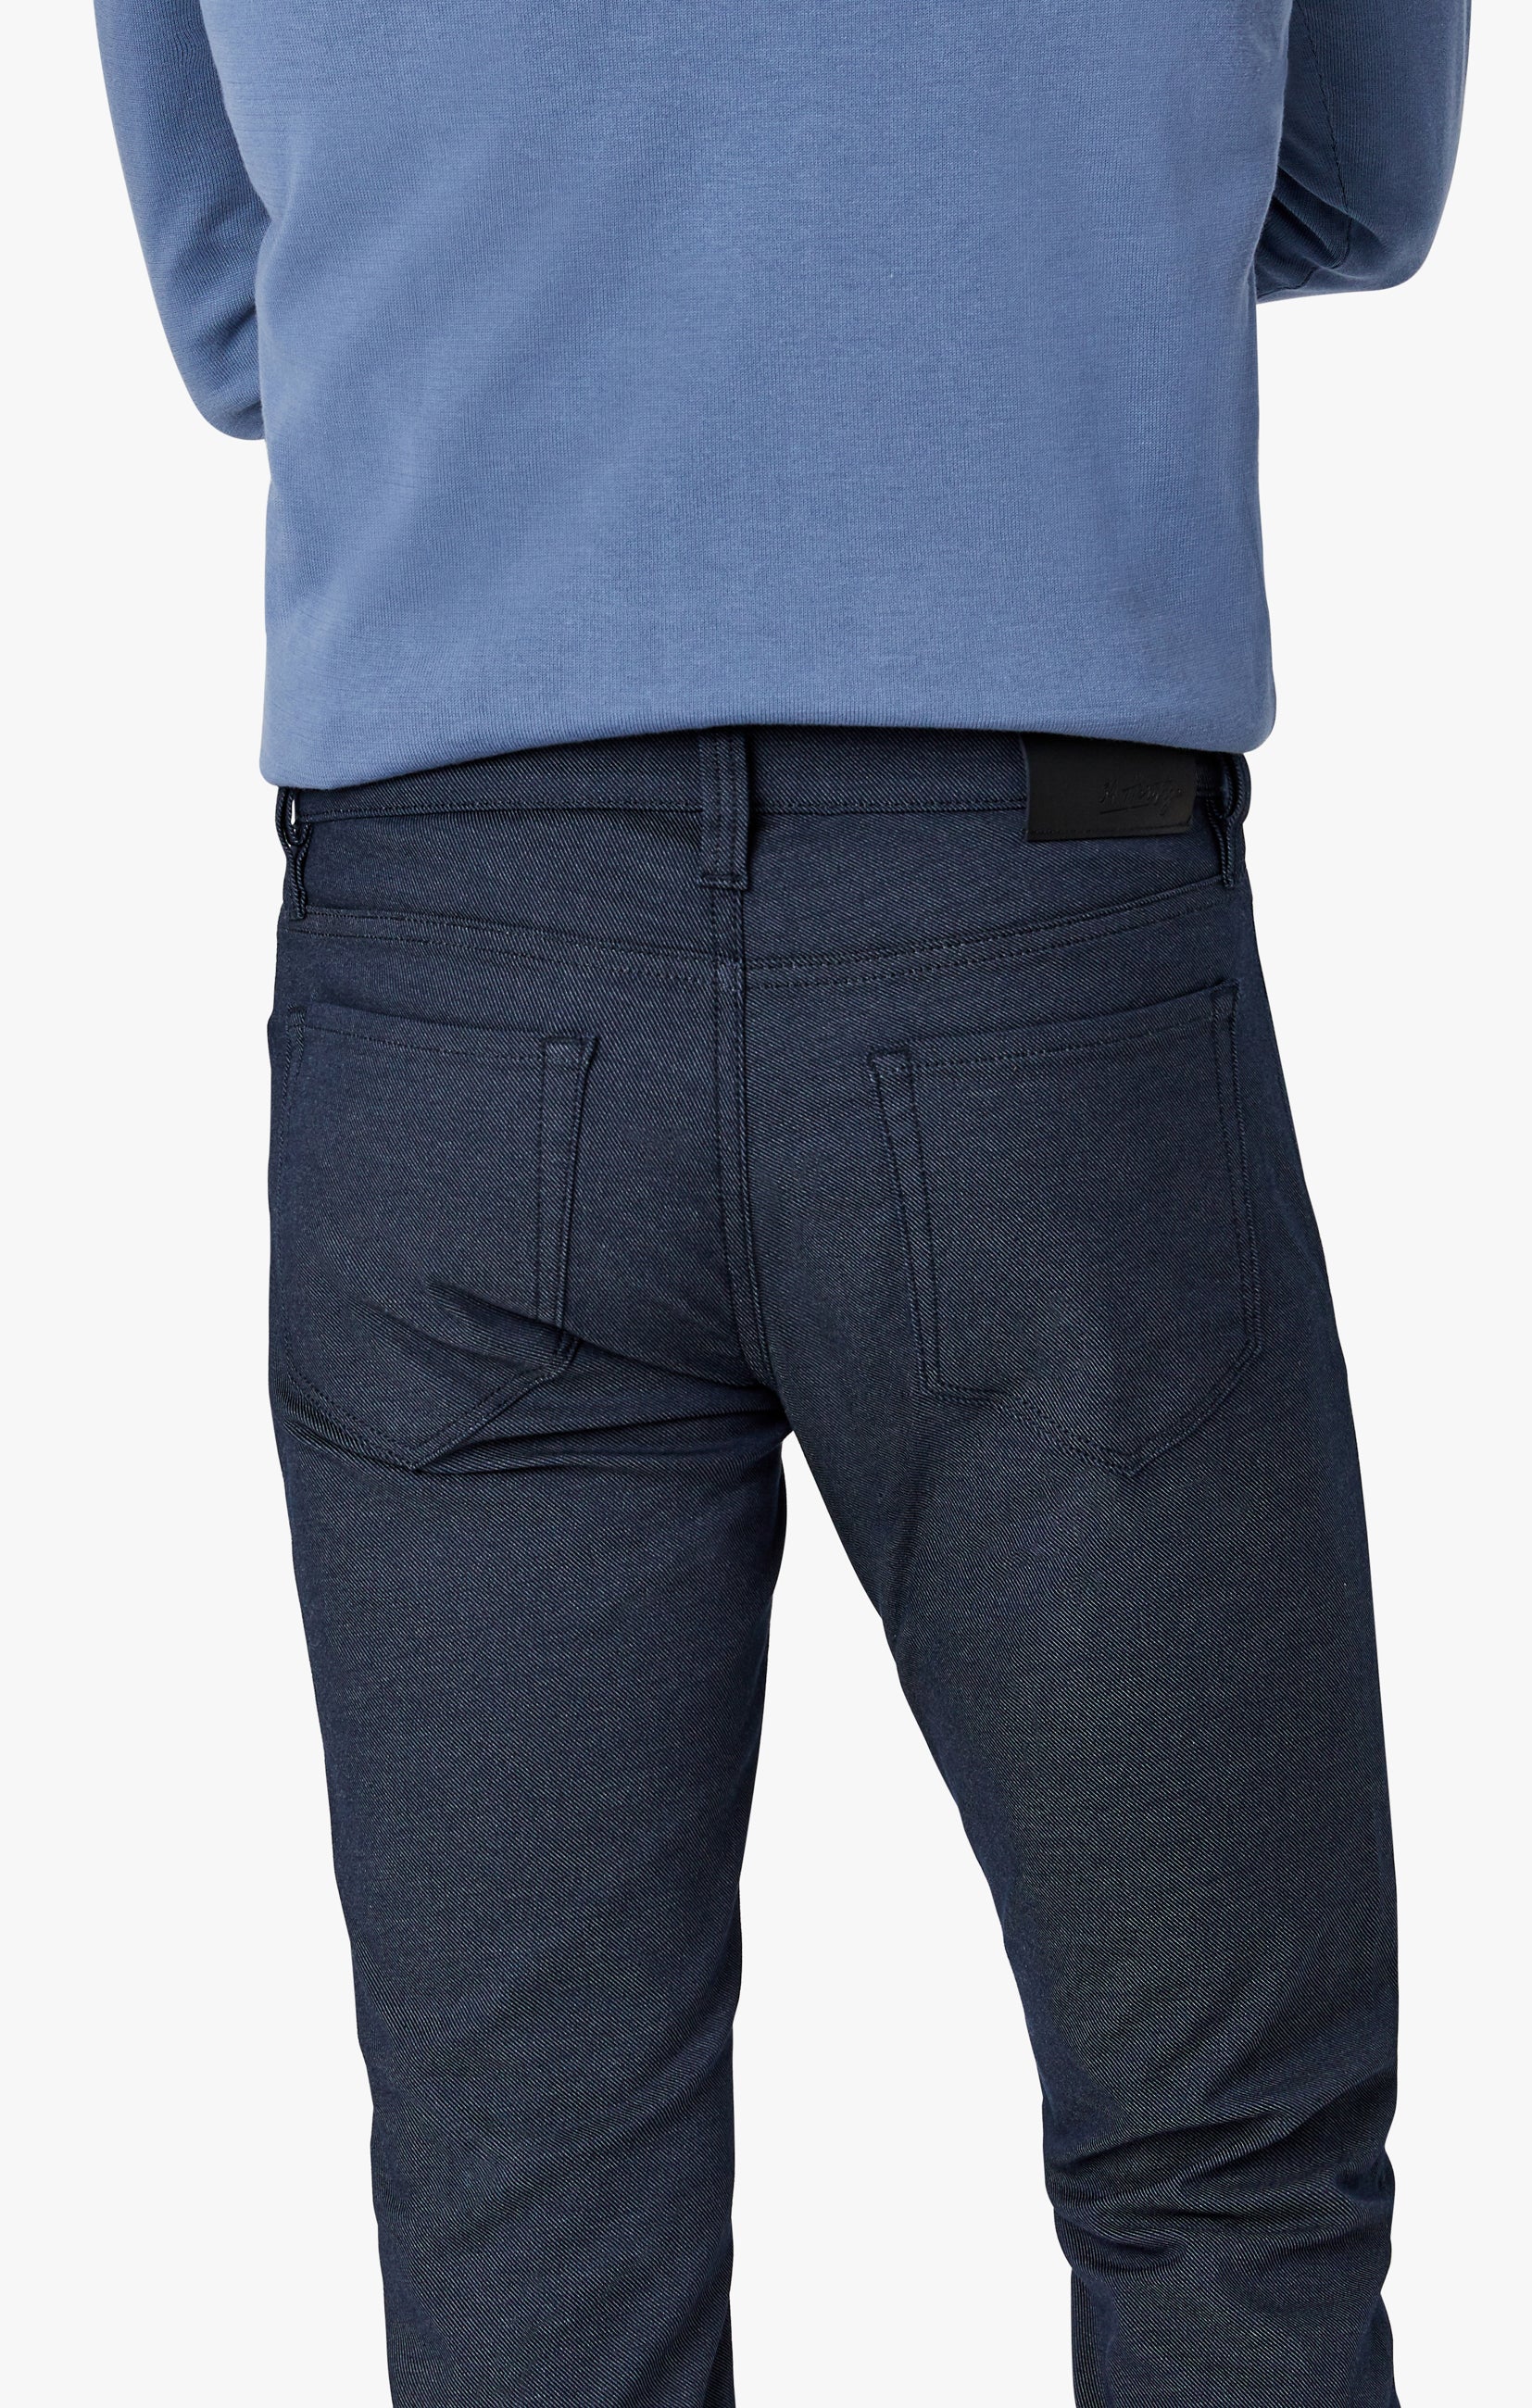 BOSS - Regular-fit jeans in blue Coolmax® denim